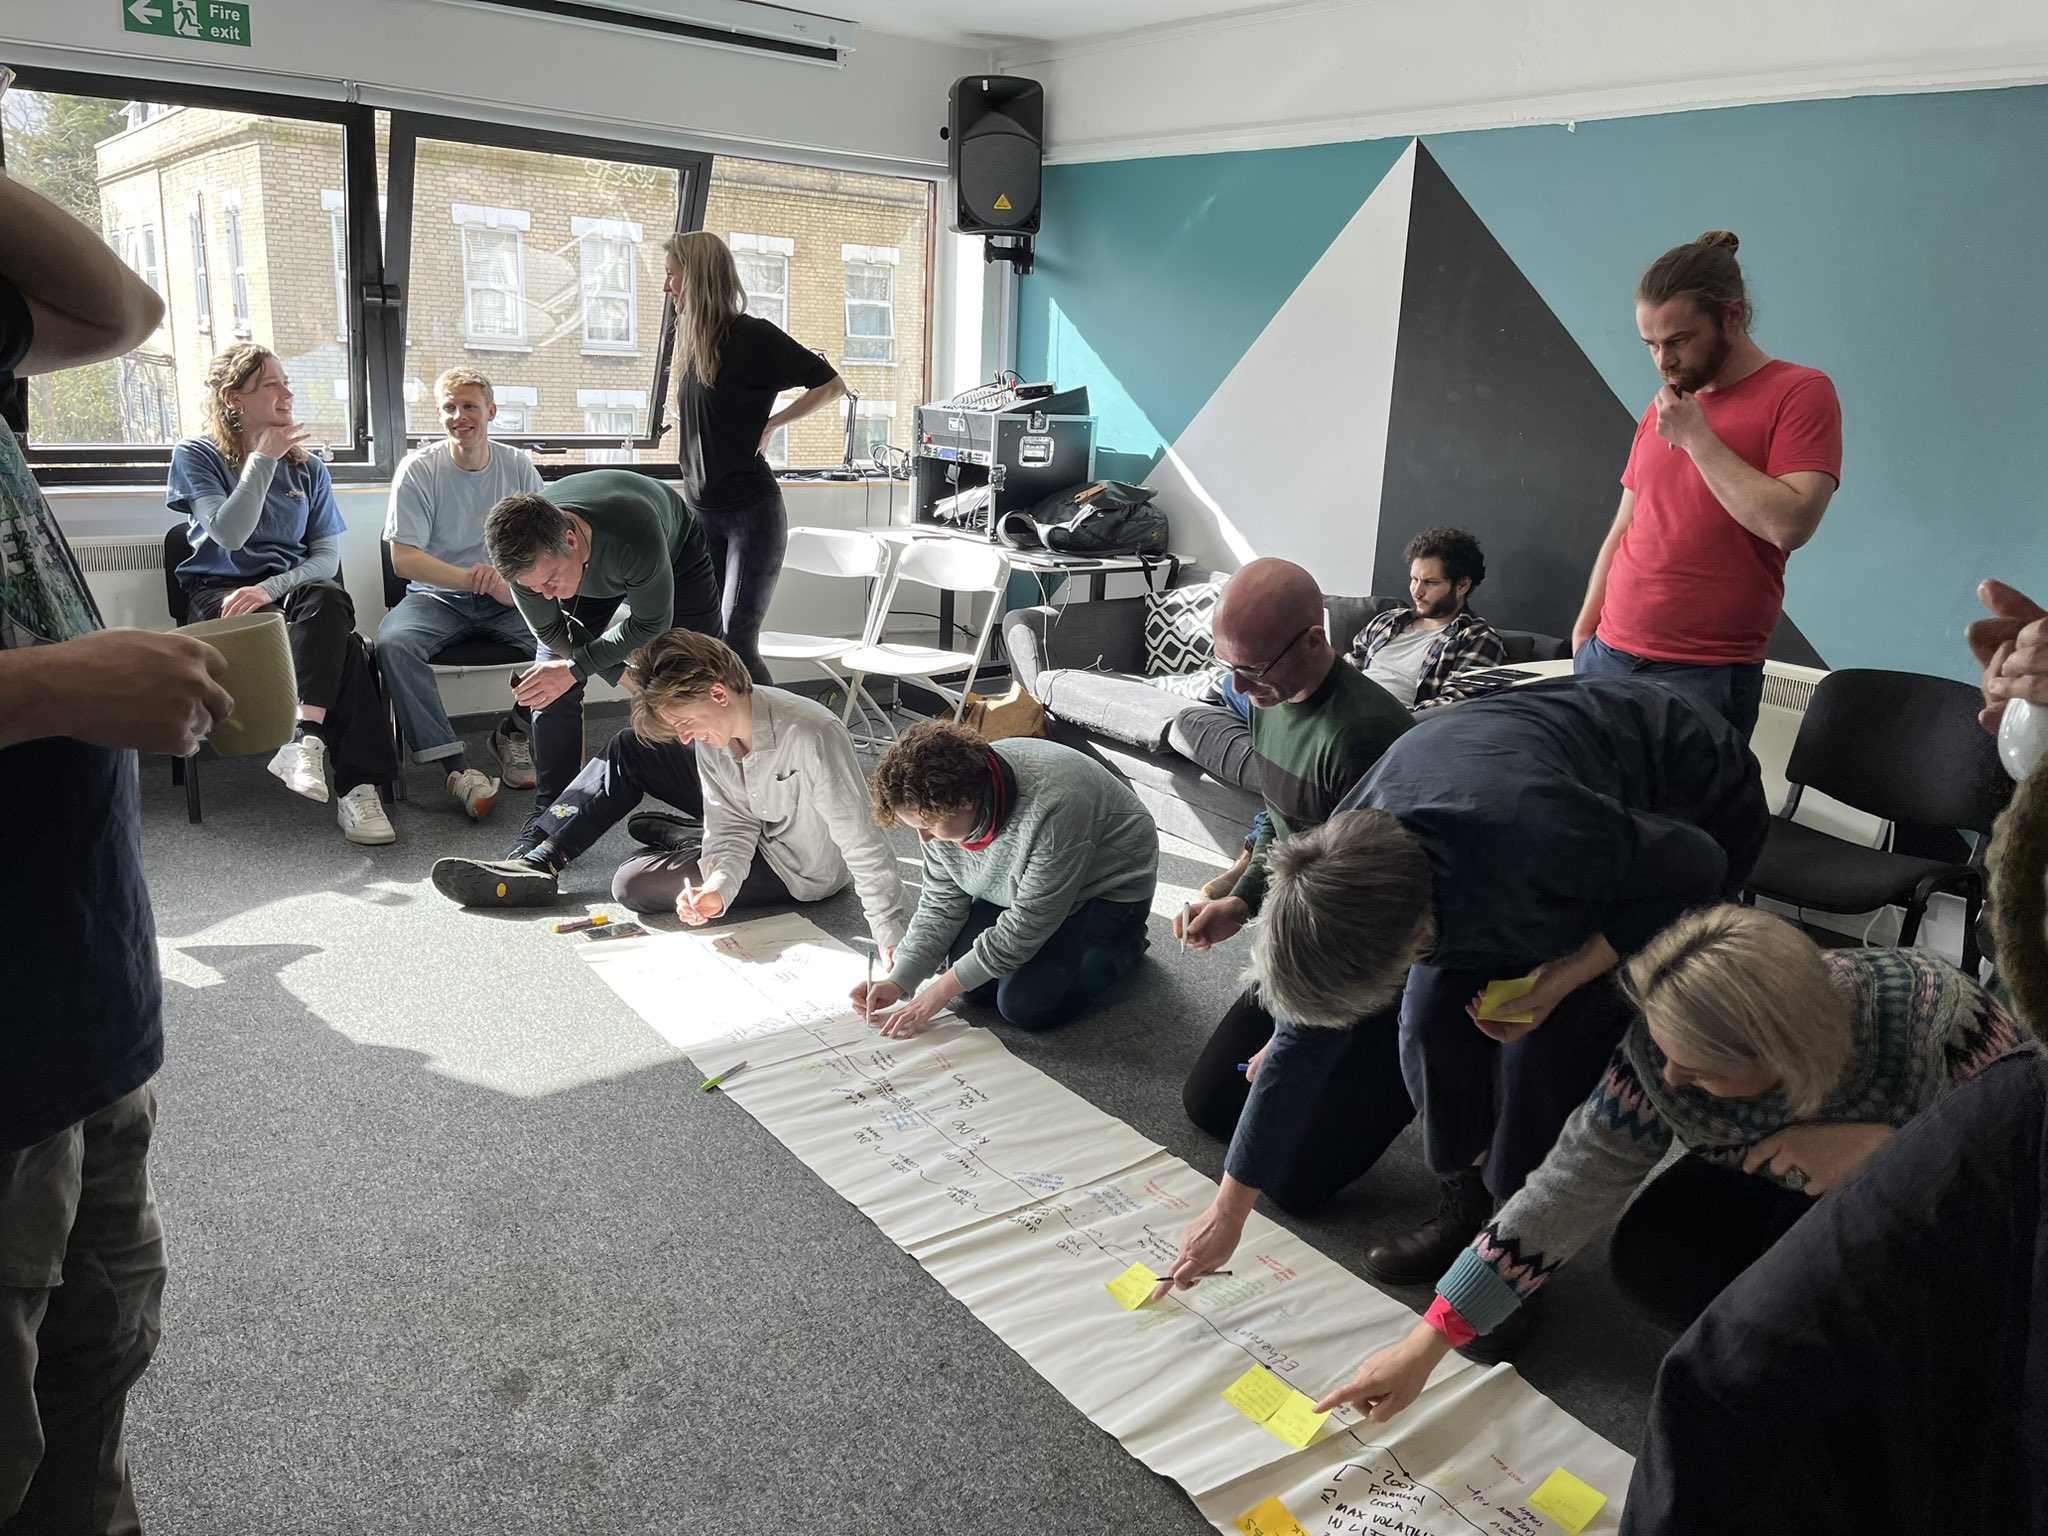 People on the floor brainstorming on large paper